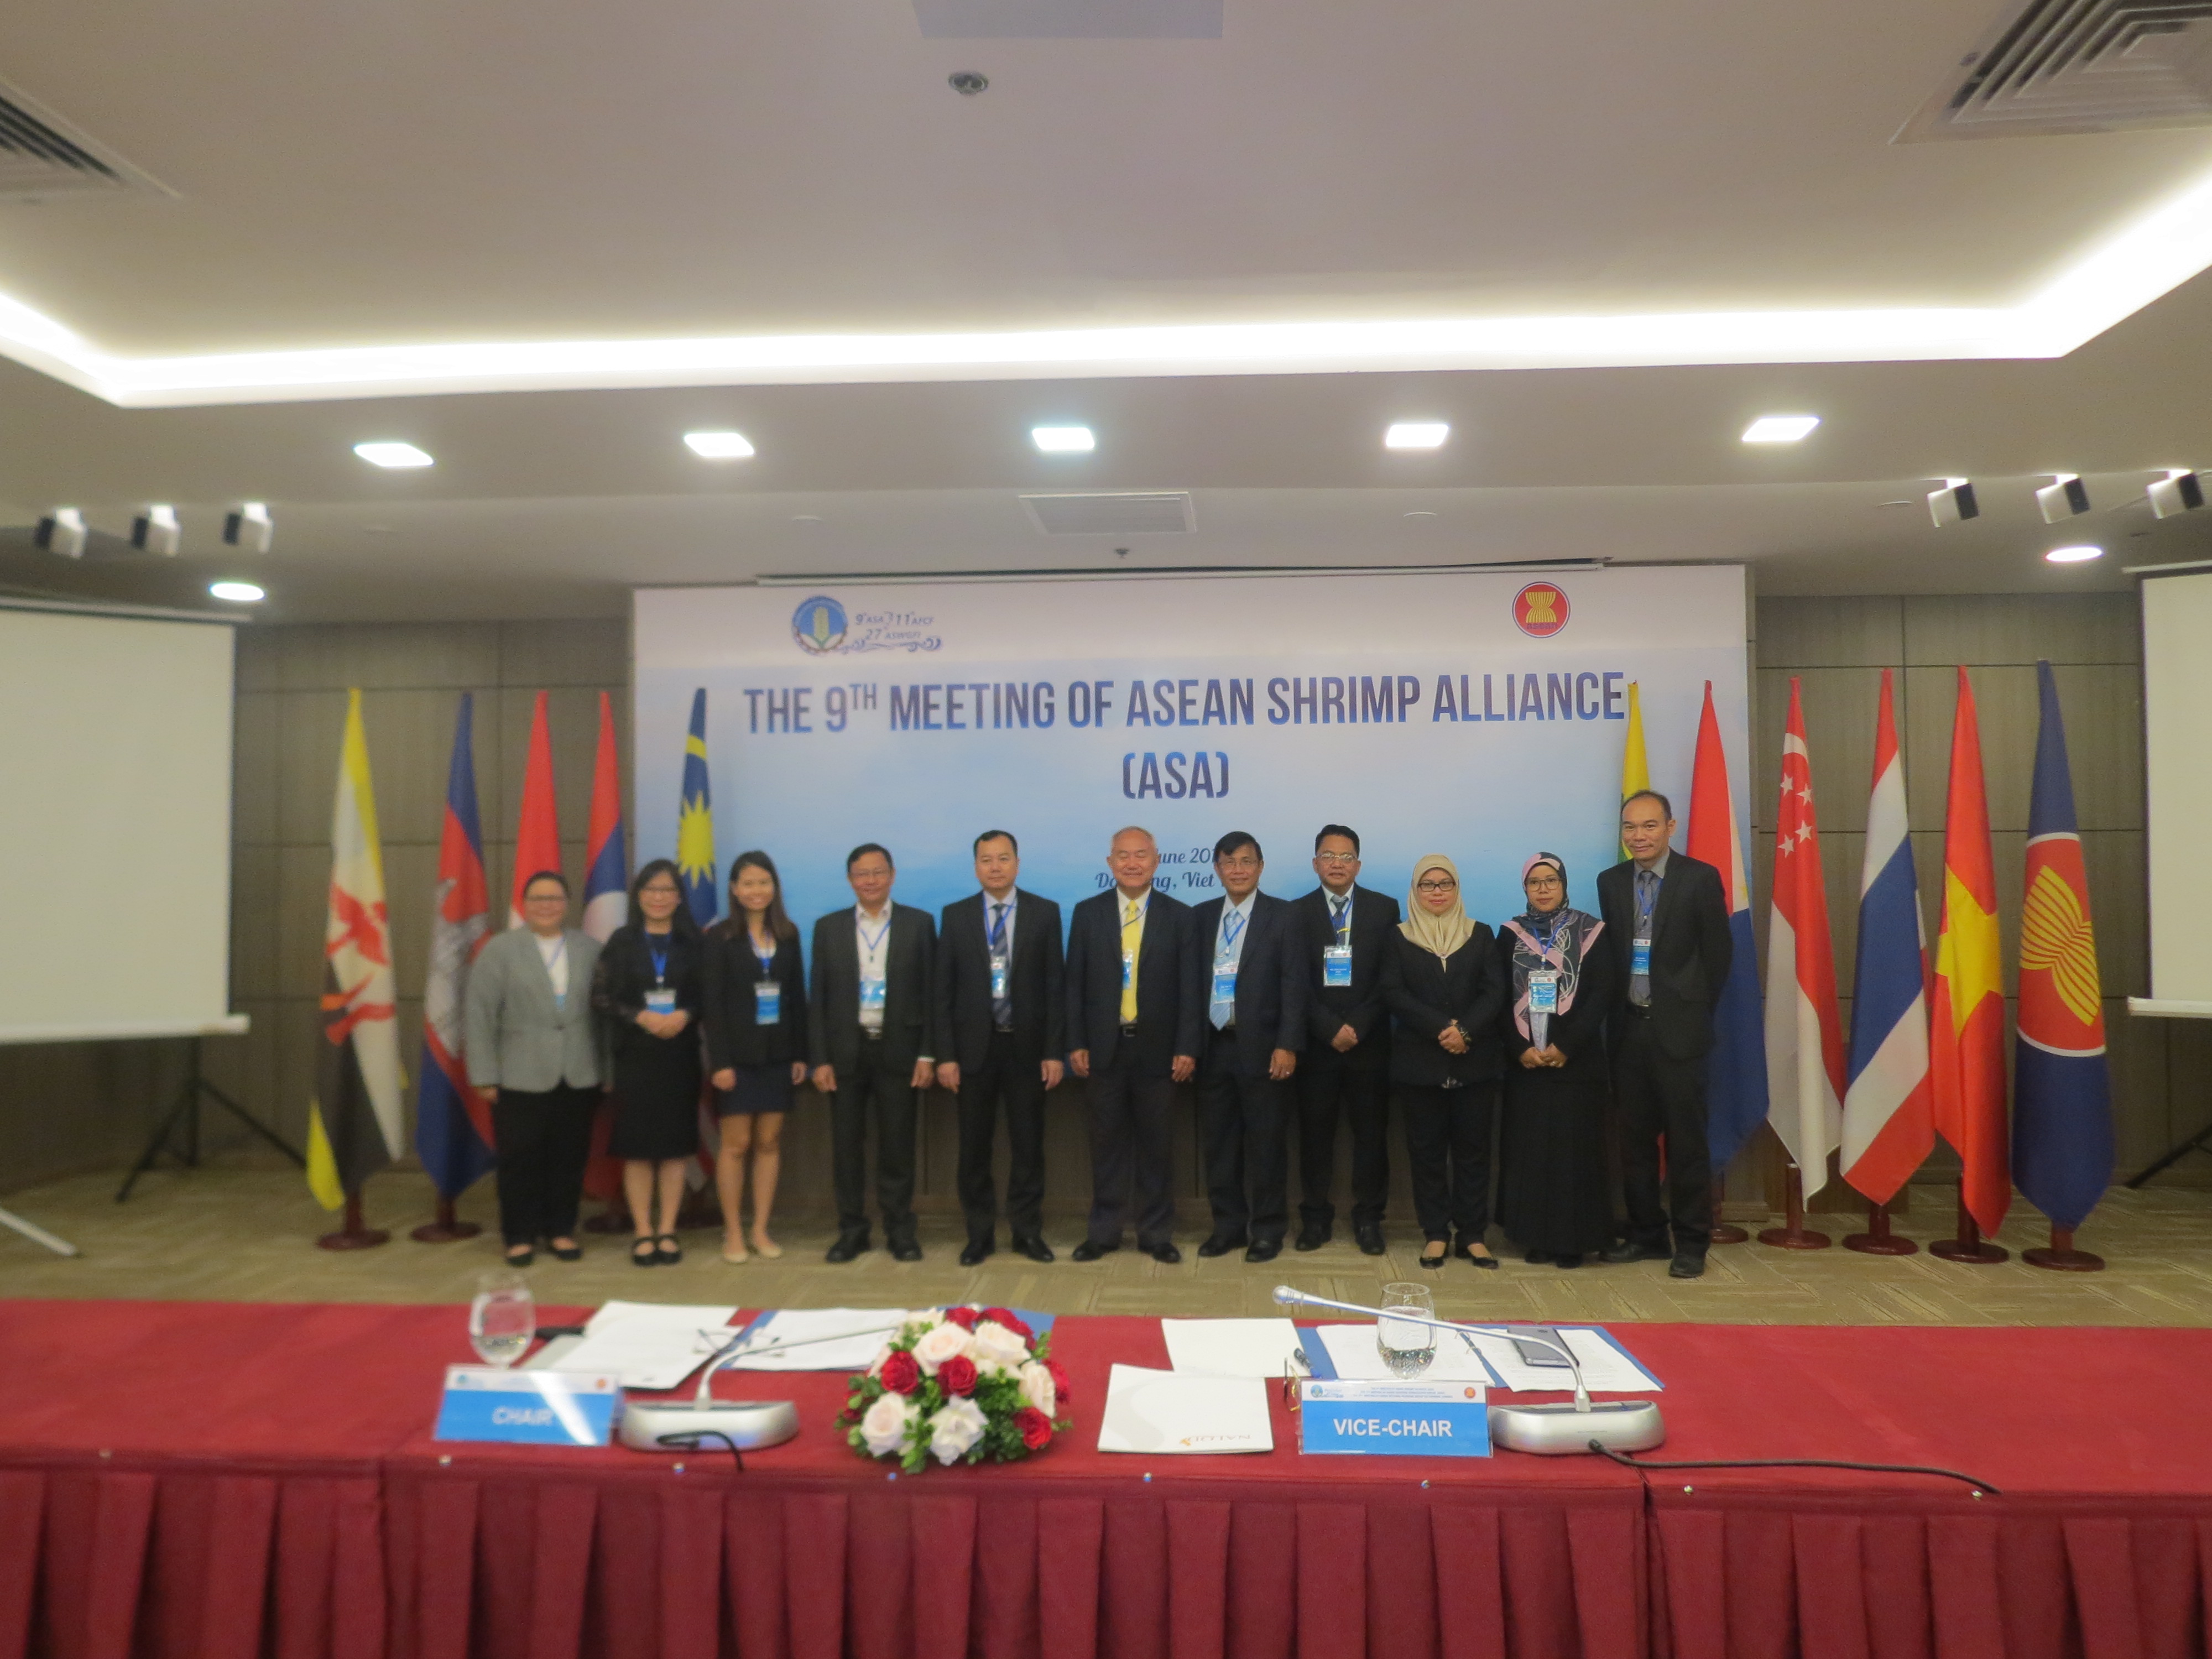 The 9th Meeting of ASEAN Shrimp Alliance (ASA)